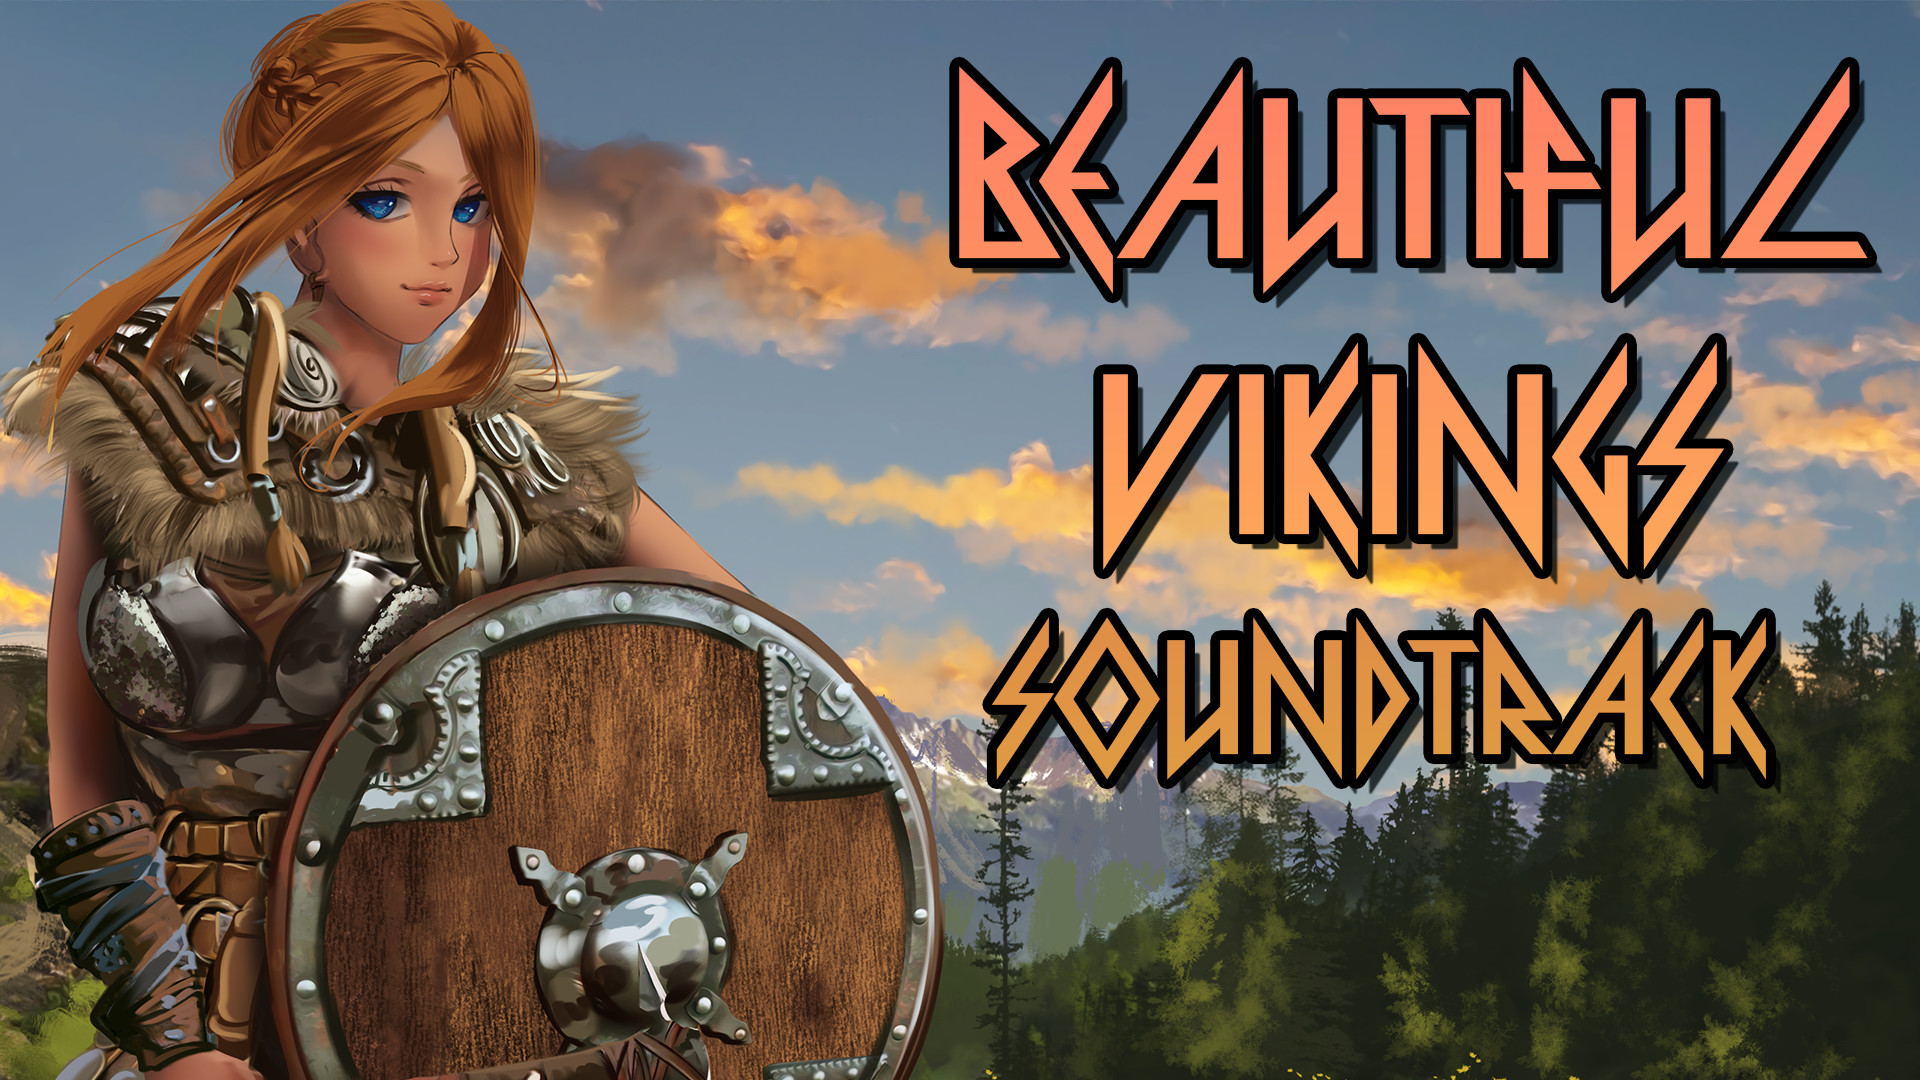 Beautiful Vikings Soundtrack Featured Screenshot #1